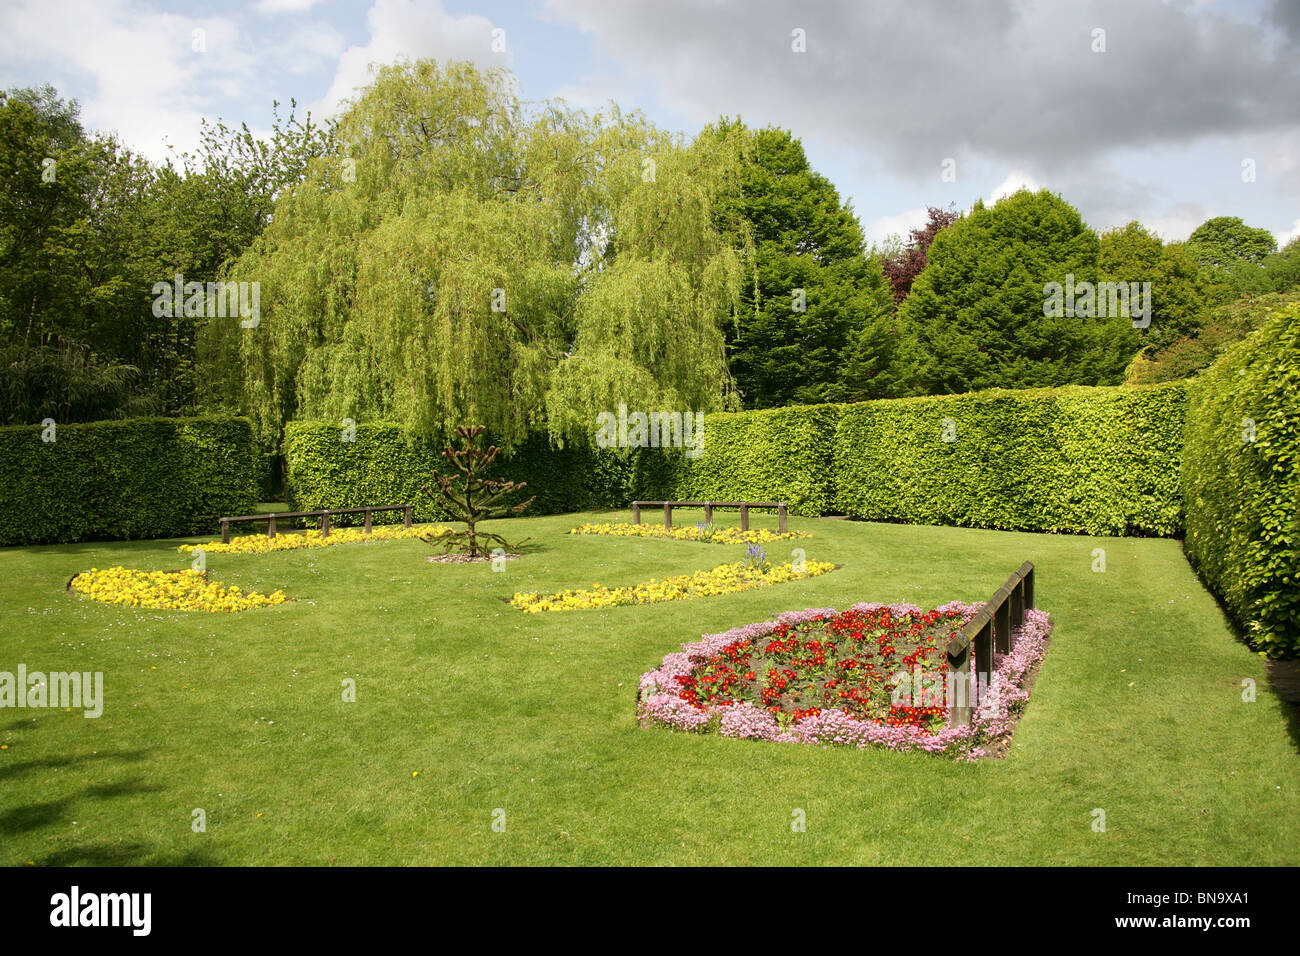 Walkden Gardens, Sale, England. Spring bedding plants within the Memories Garden of Walkden Gardens. Stock Photo